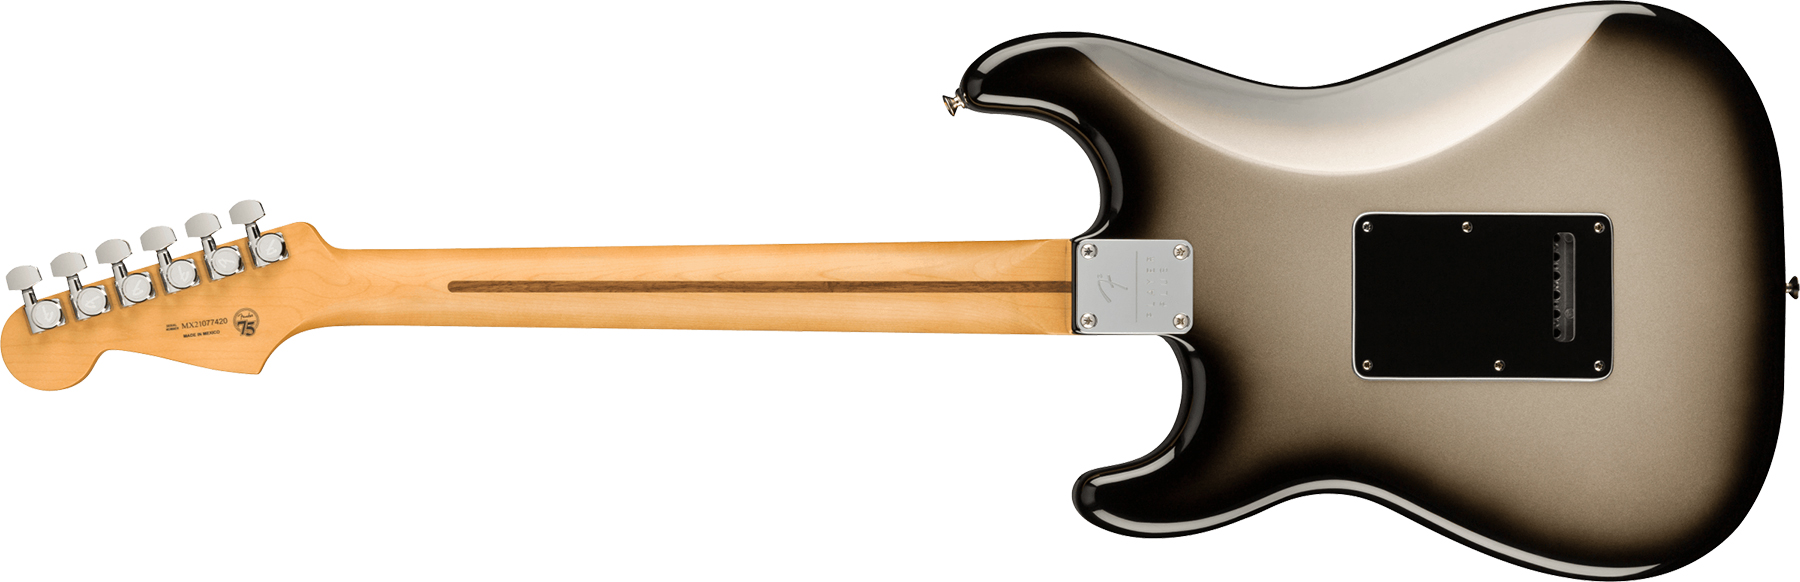 Fender Strat Player Plus Mex Hss Trem Pf - Silverburst - Str shape electric guitar - Variation 1